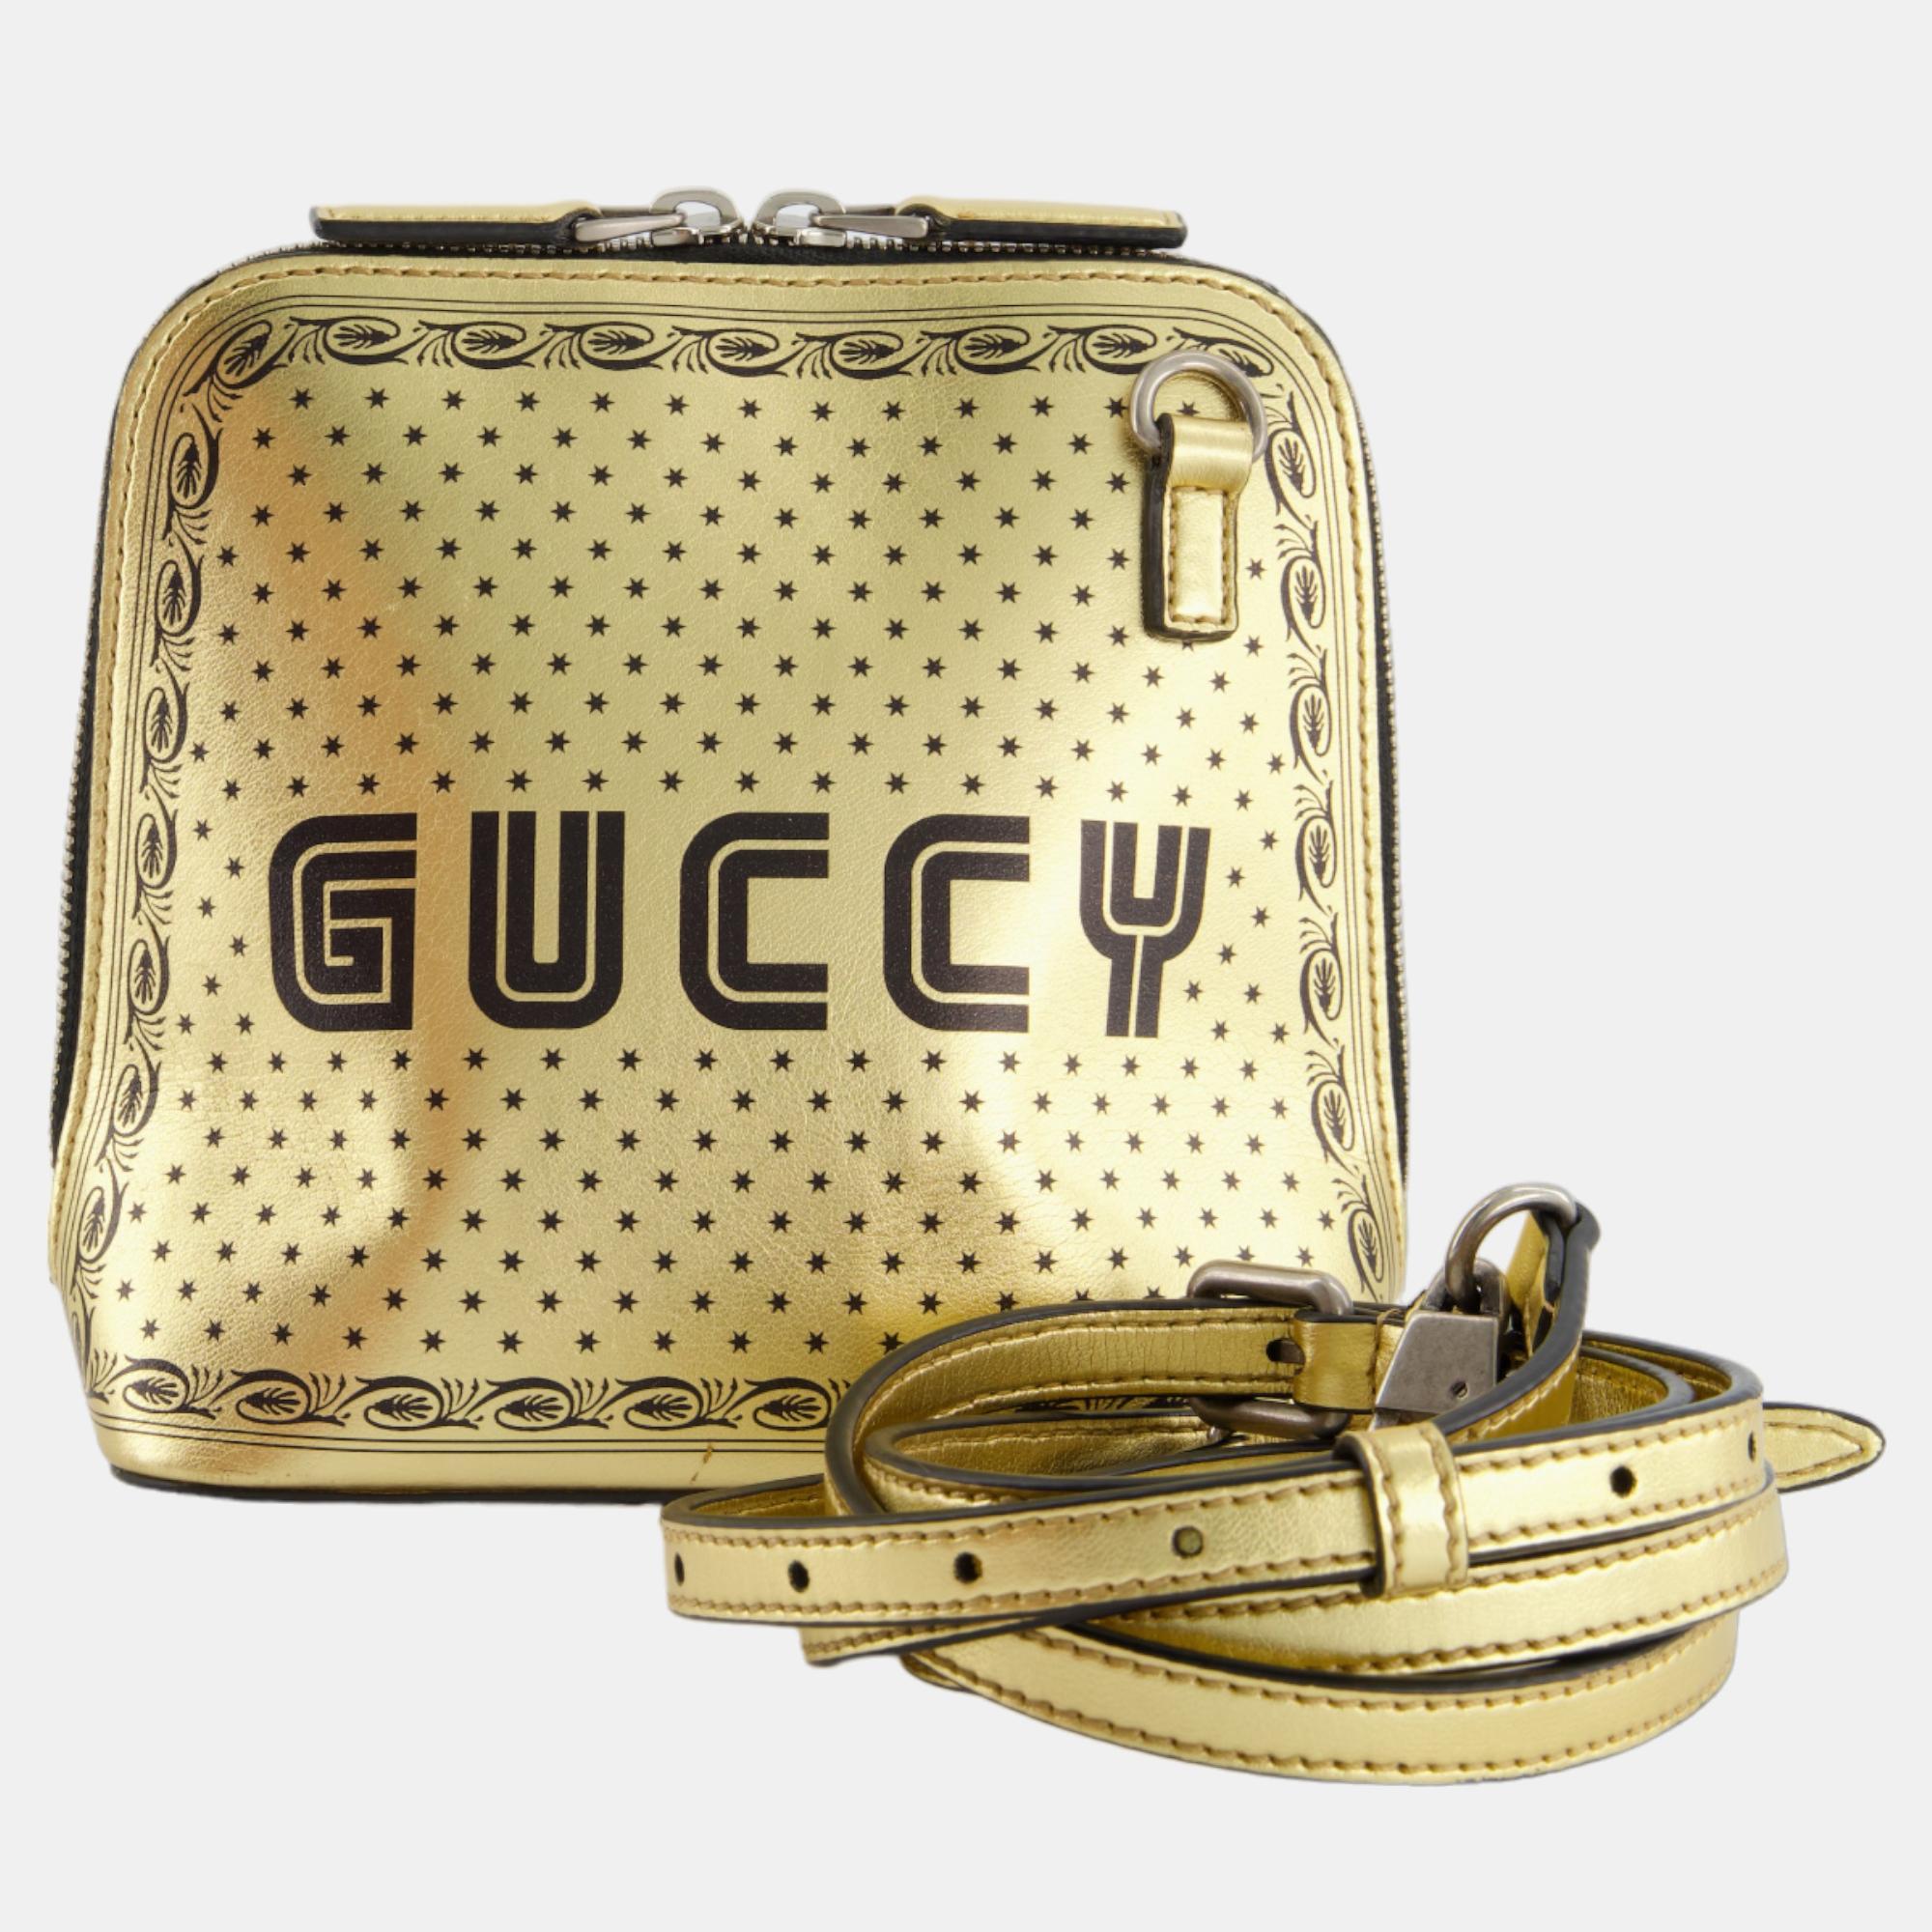 Gucci Gold And Black Leather Guccy Mini Dome Sega Bag